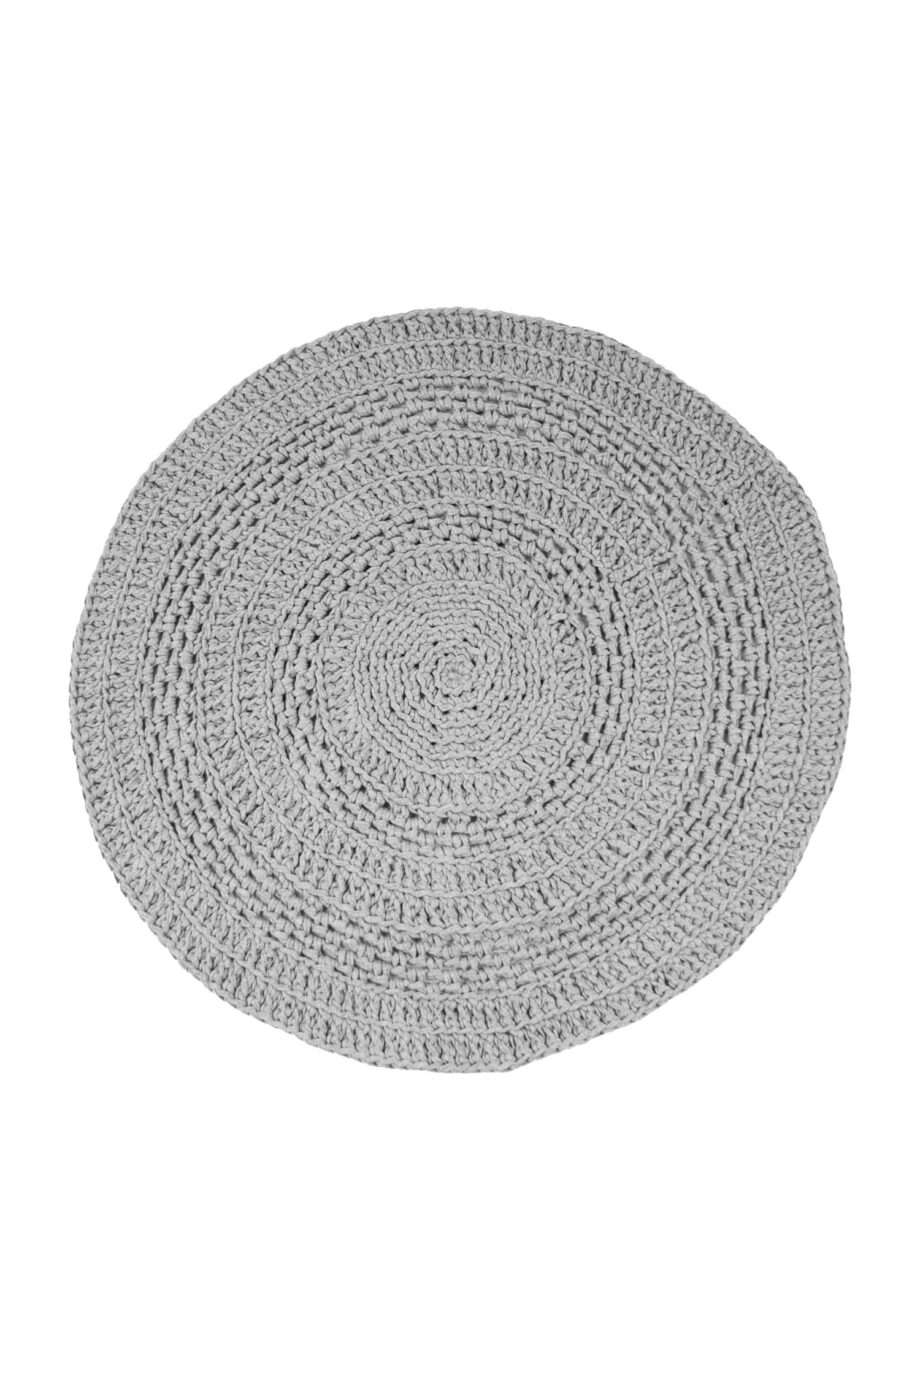 peony light grey crochet cotton floor mat small